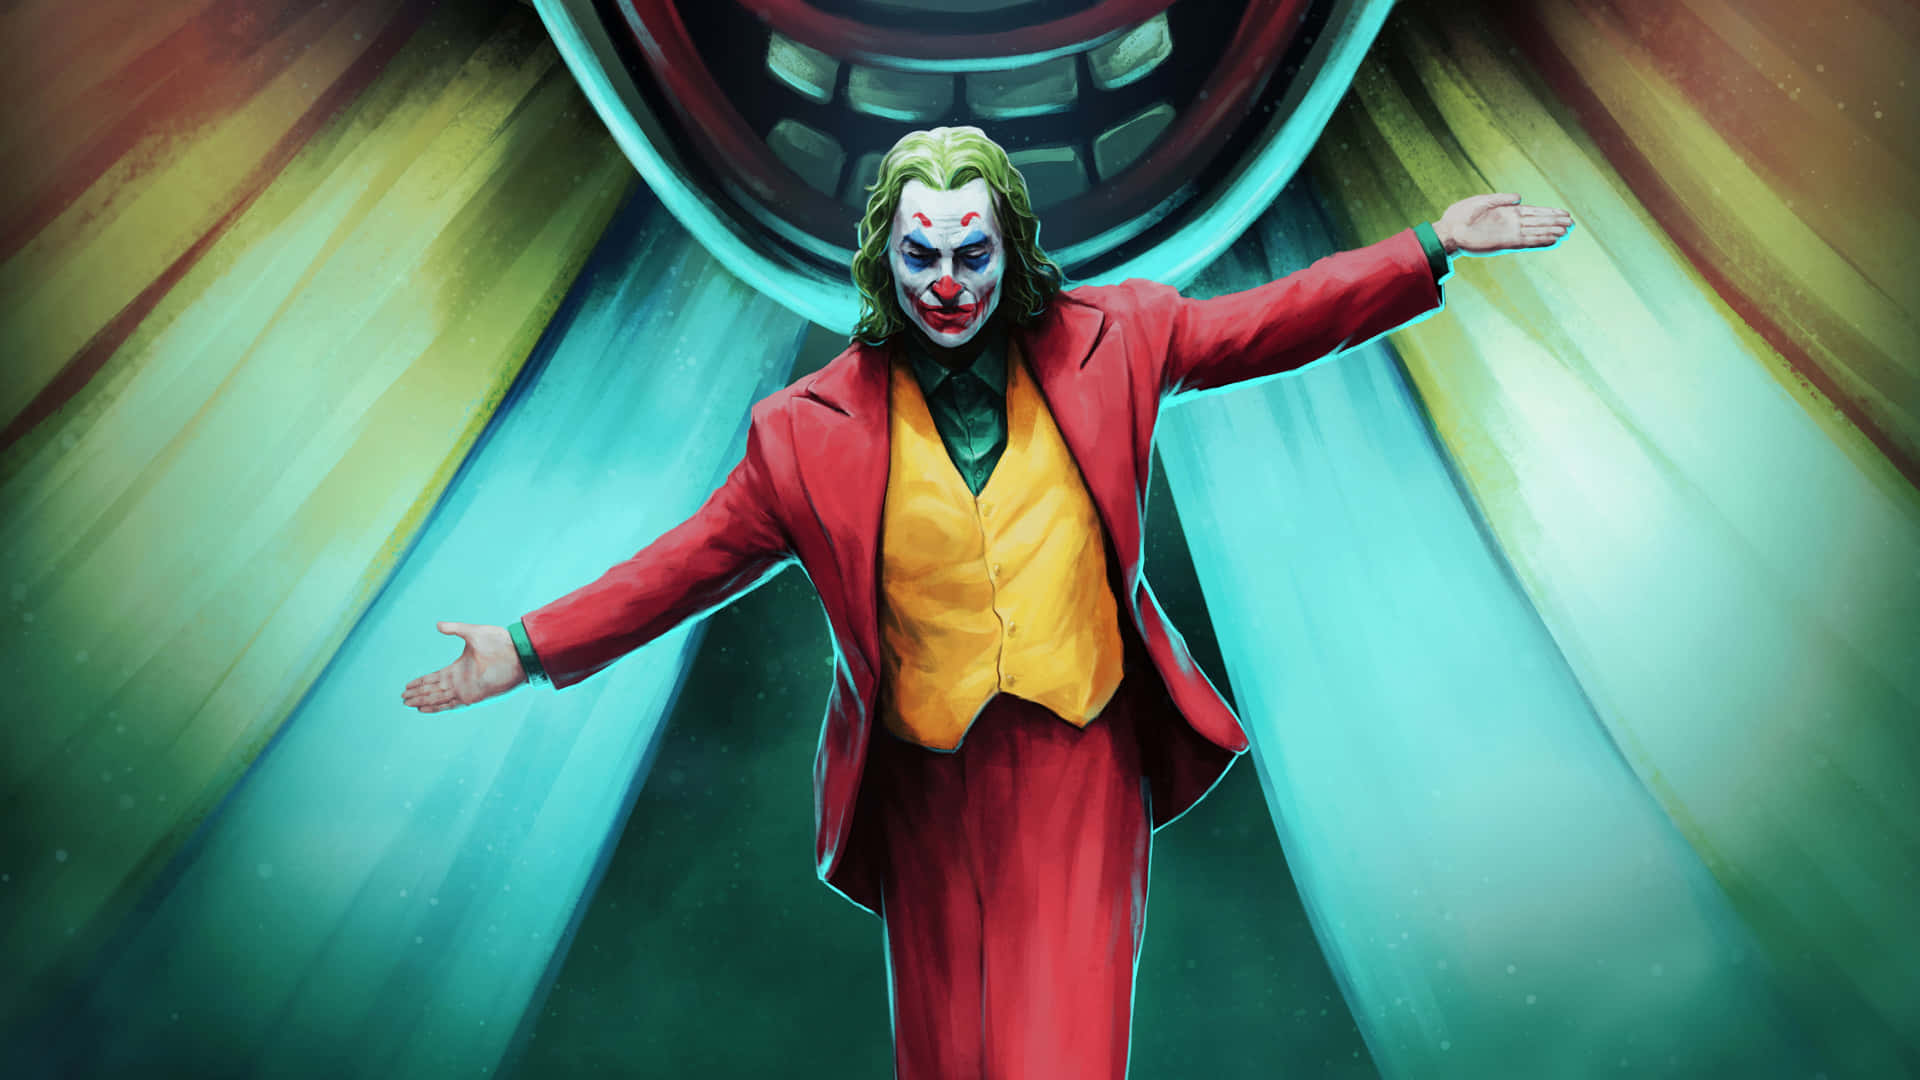 Joker Painting 3840 X 2160 Wallpaper Wallpaper